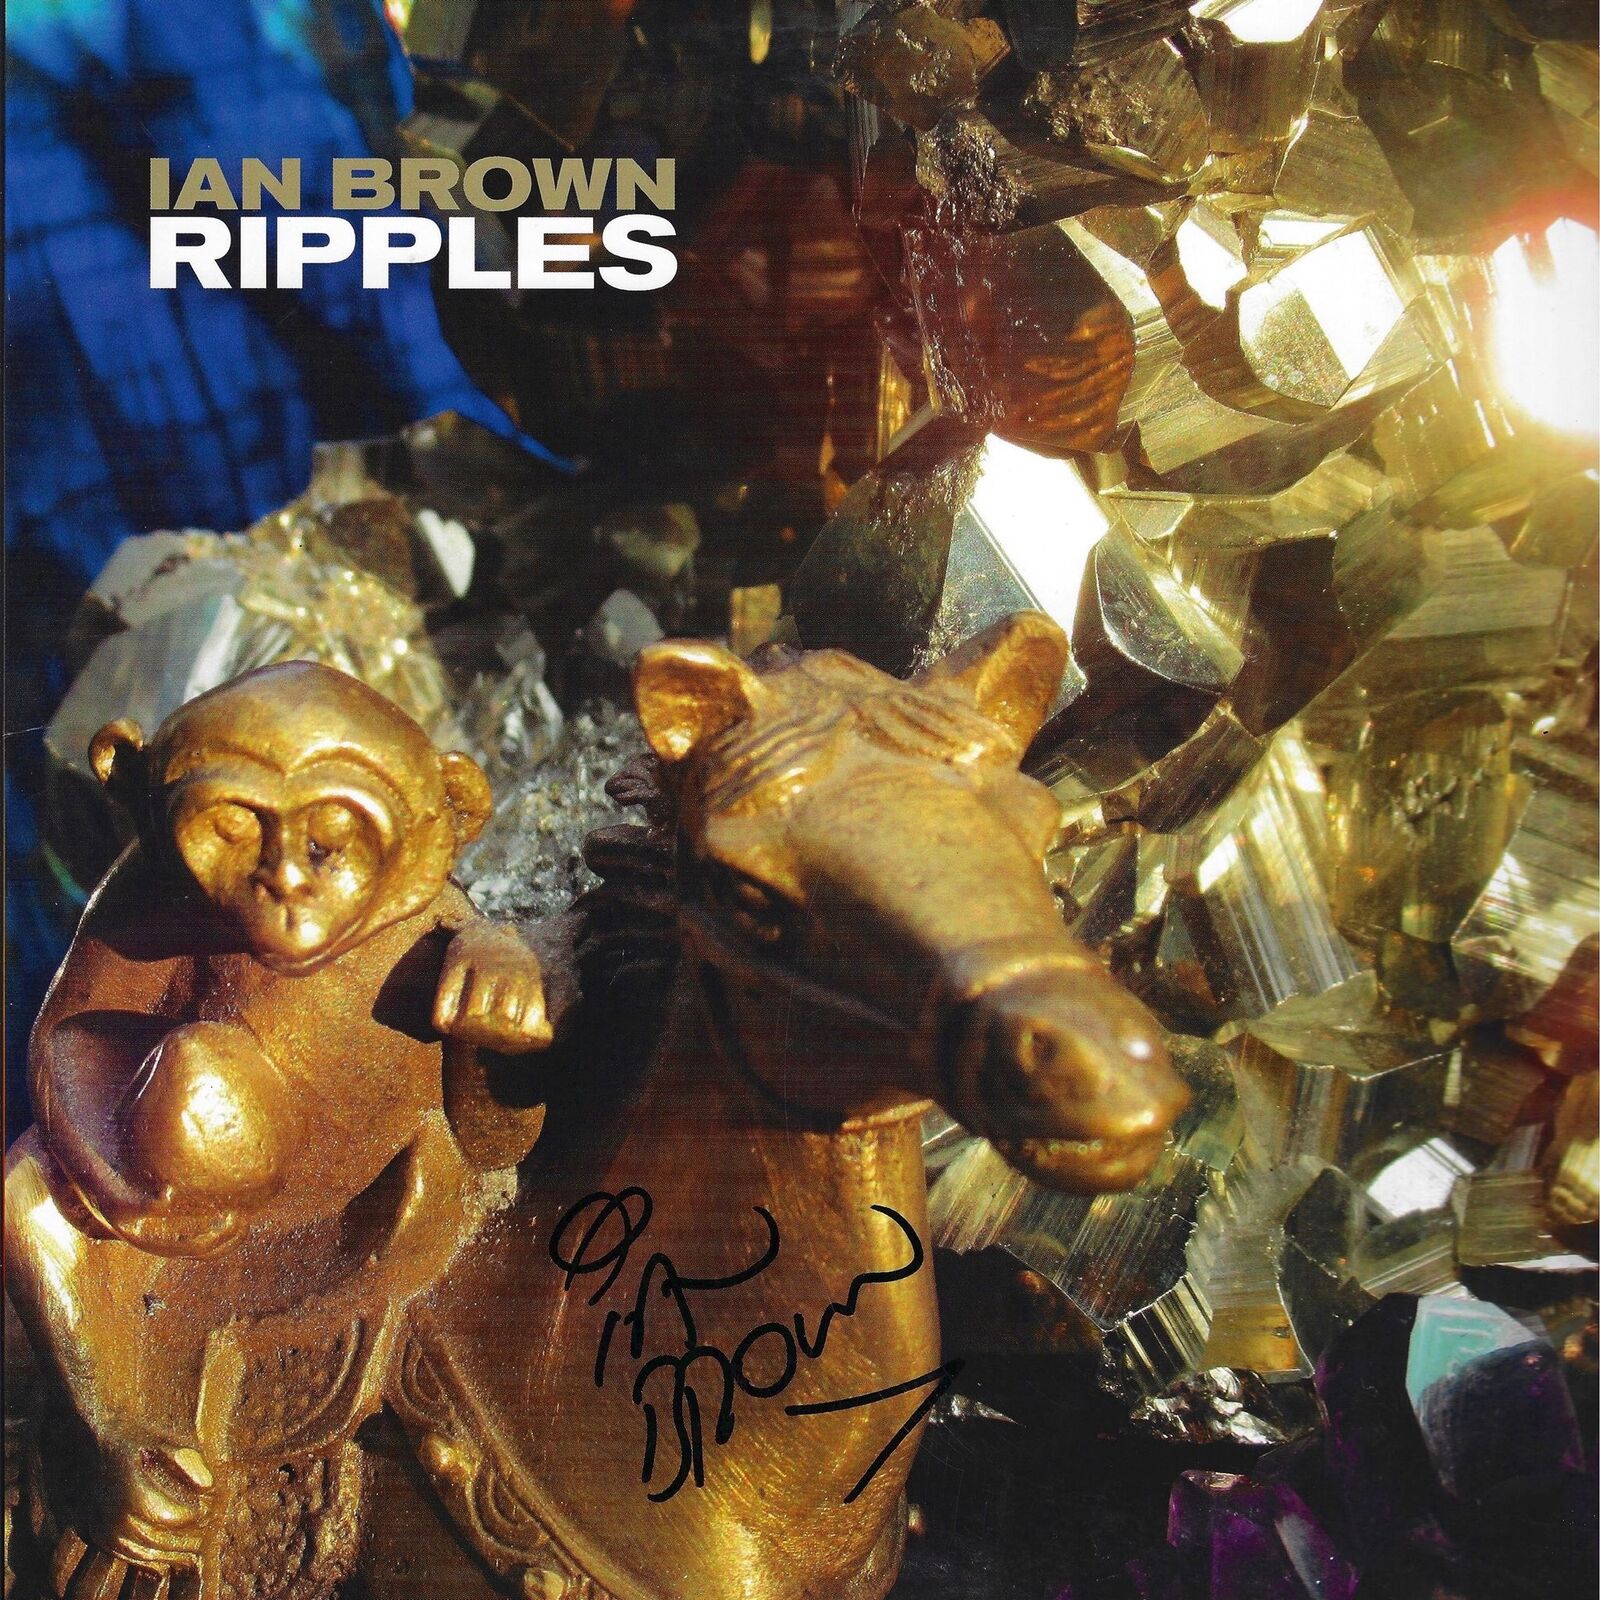 IAN BROWN SIGNED RIPPLES ALBUM 12” VINYL LP (AFTAL COA)